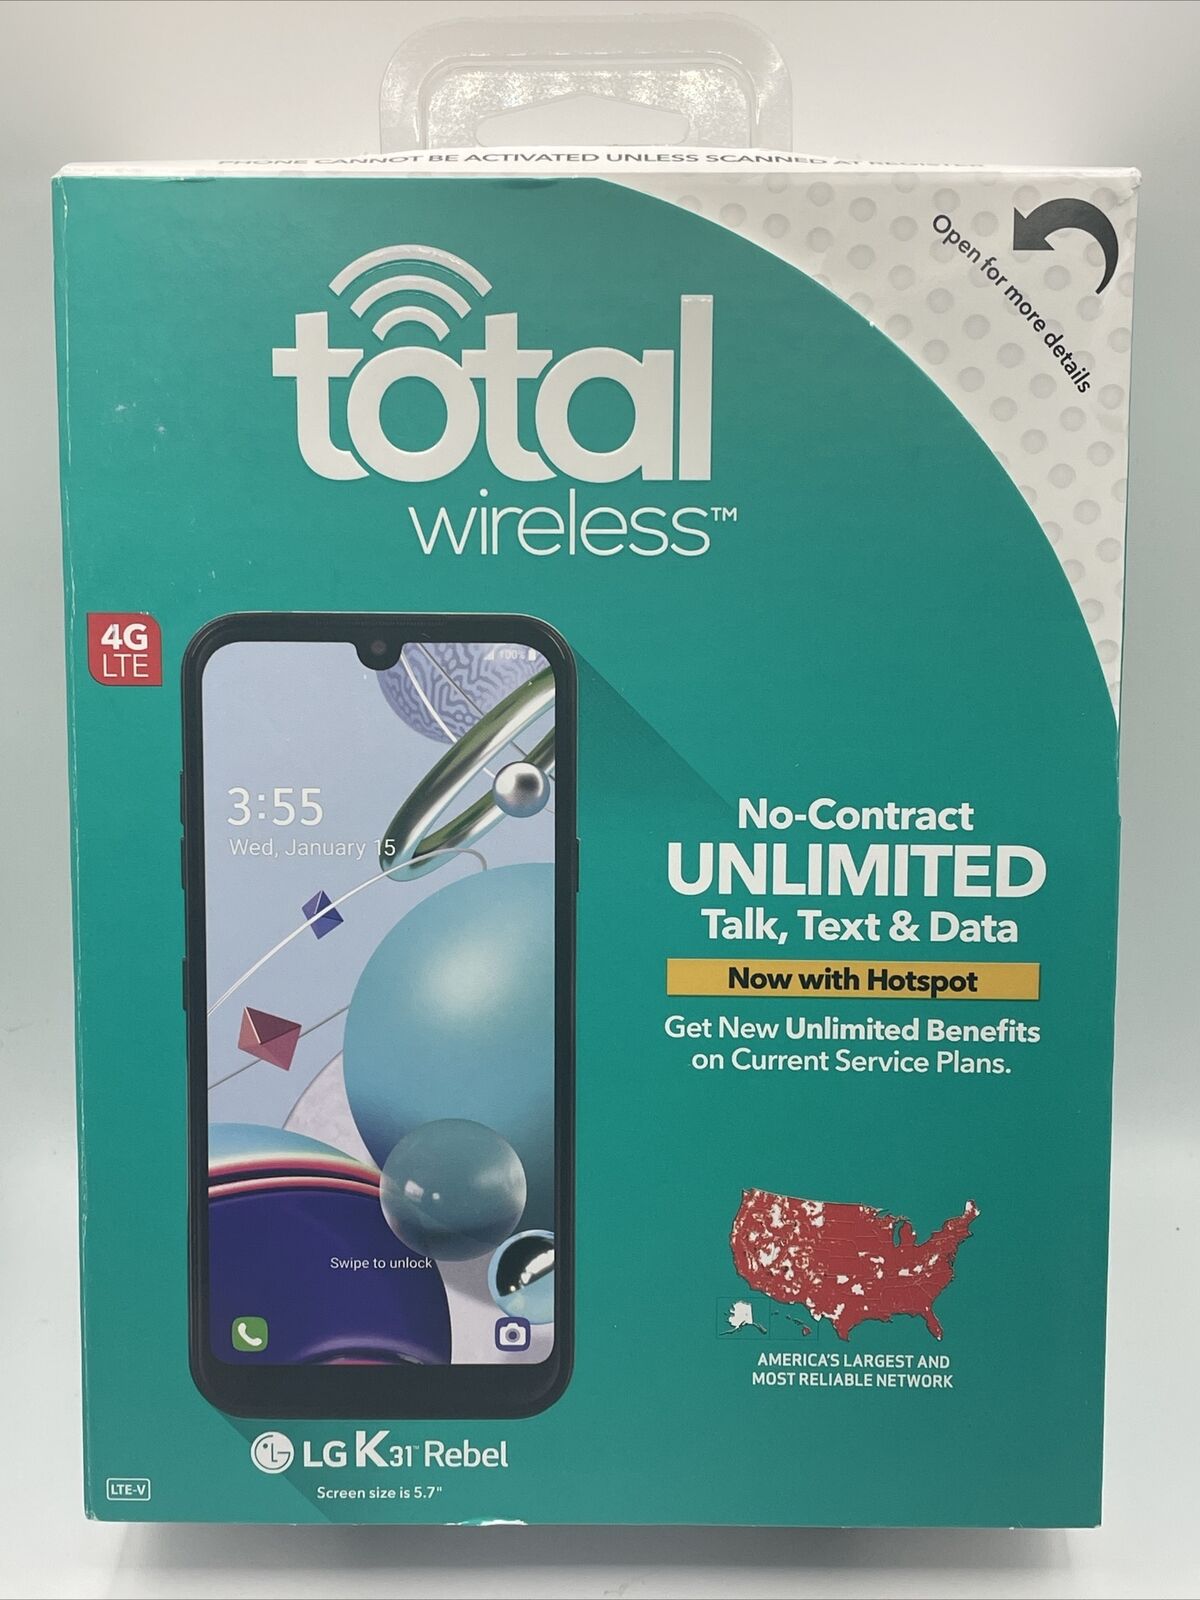 Total Wireless - LG K31 Rebel Prepaid LTE Smartphone Brand New, Sealed